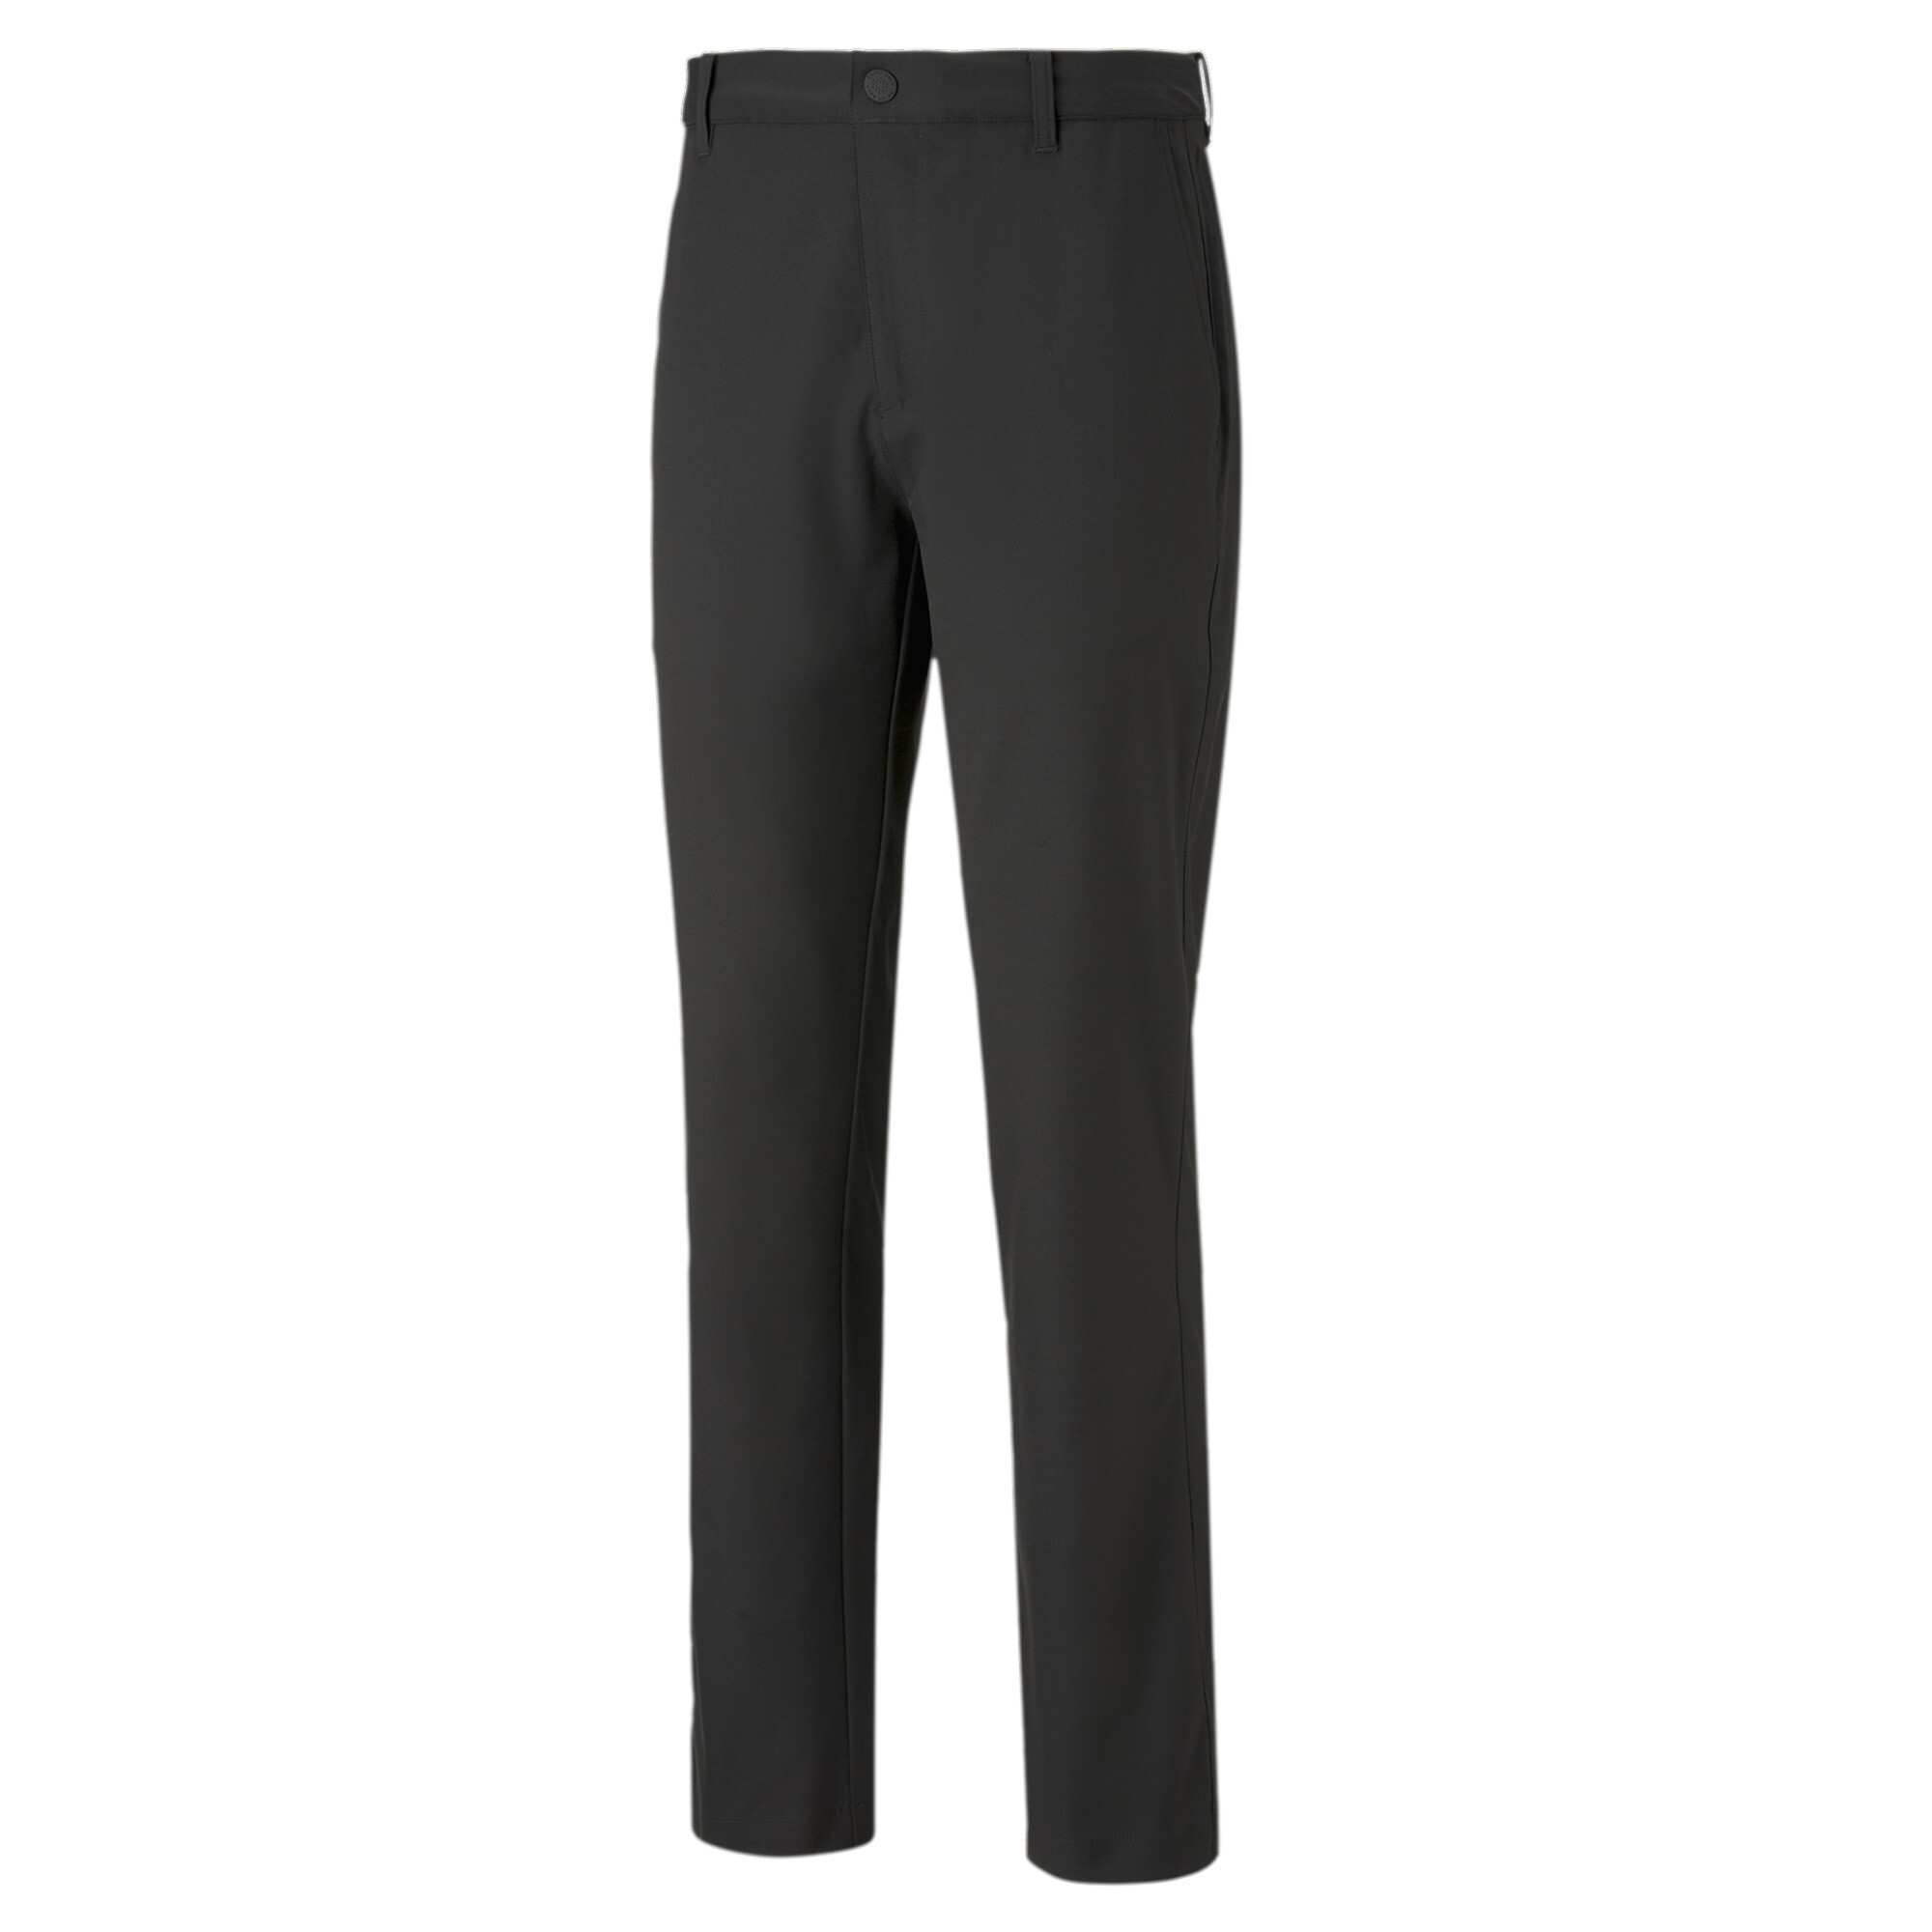 Men's Puma Dealer Golf Pants, Black, Size 34/36, Clothing